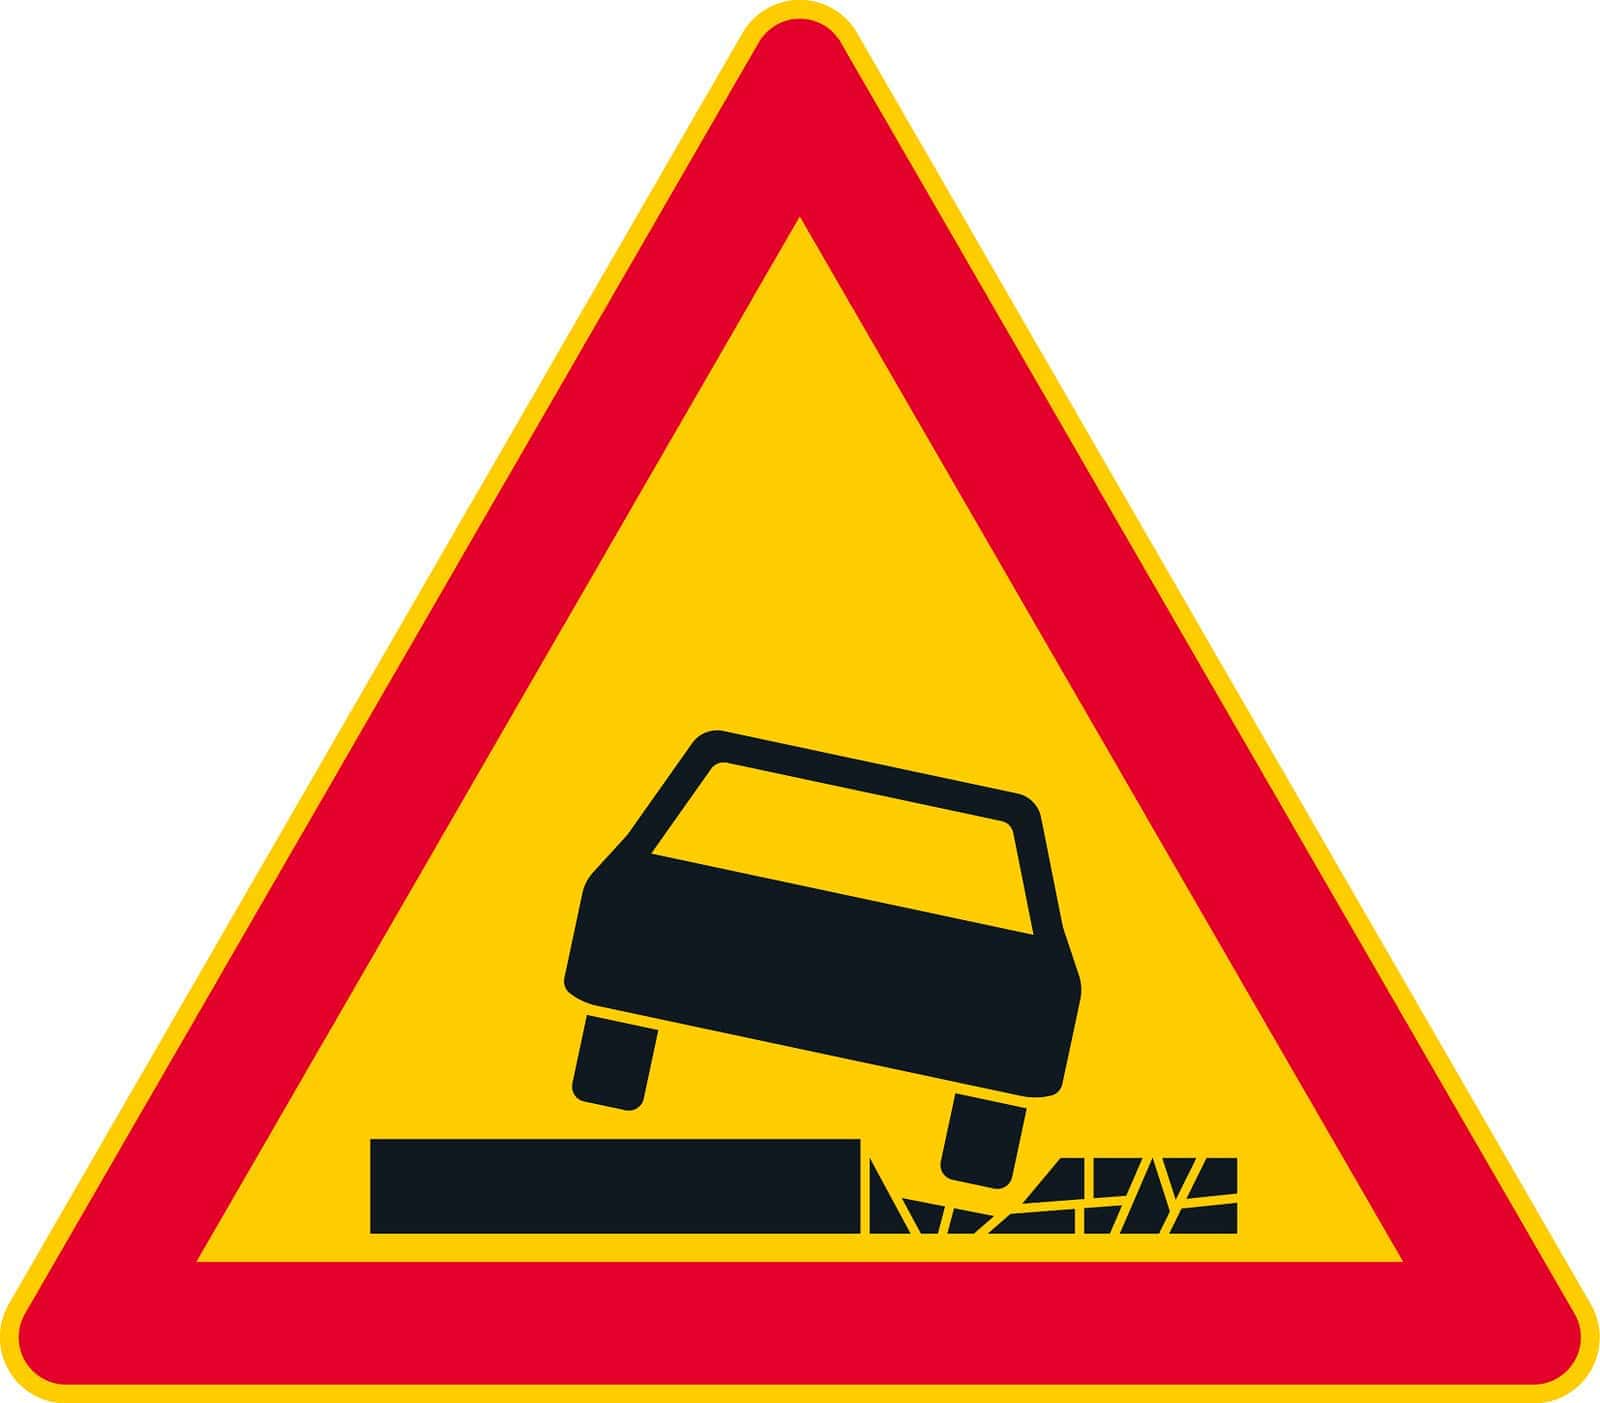 Liikennemerkki A14: Vaarallinen tien reuna